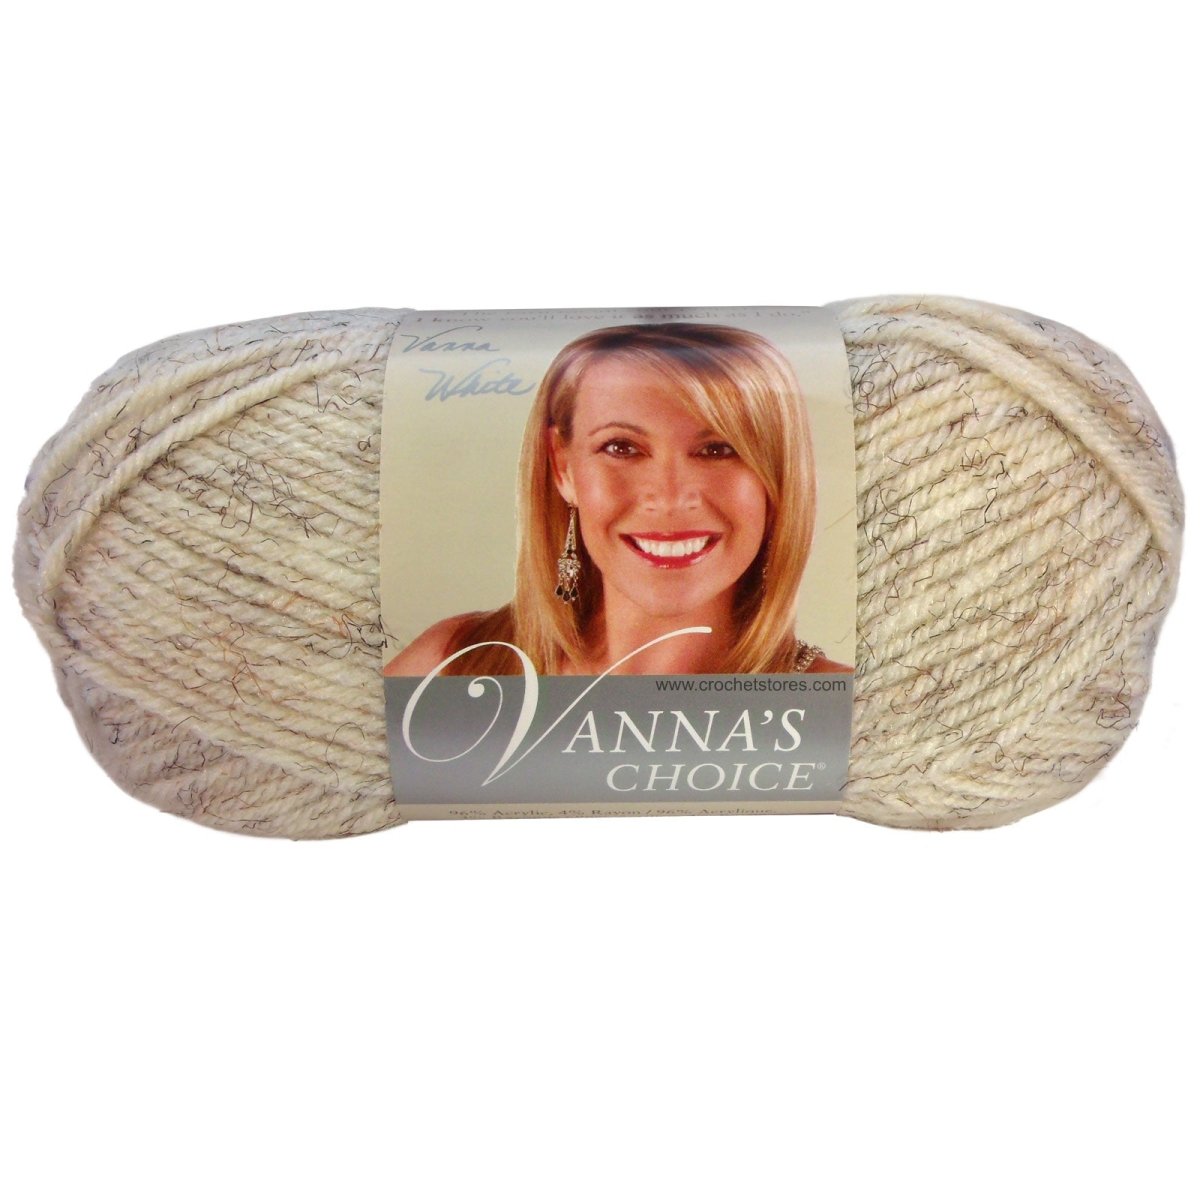 VANNAS CHOICE - Crochetstores860-402